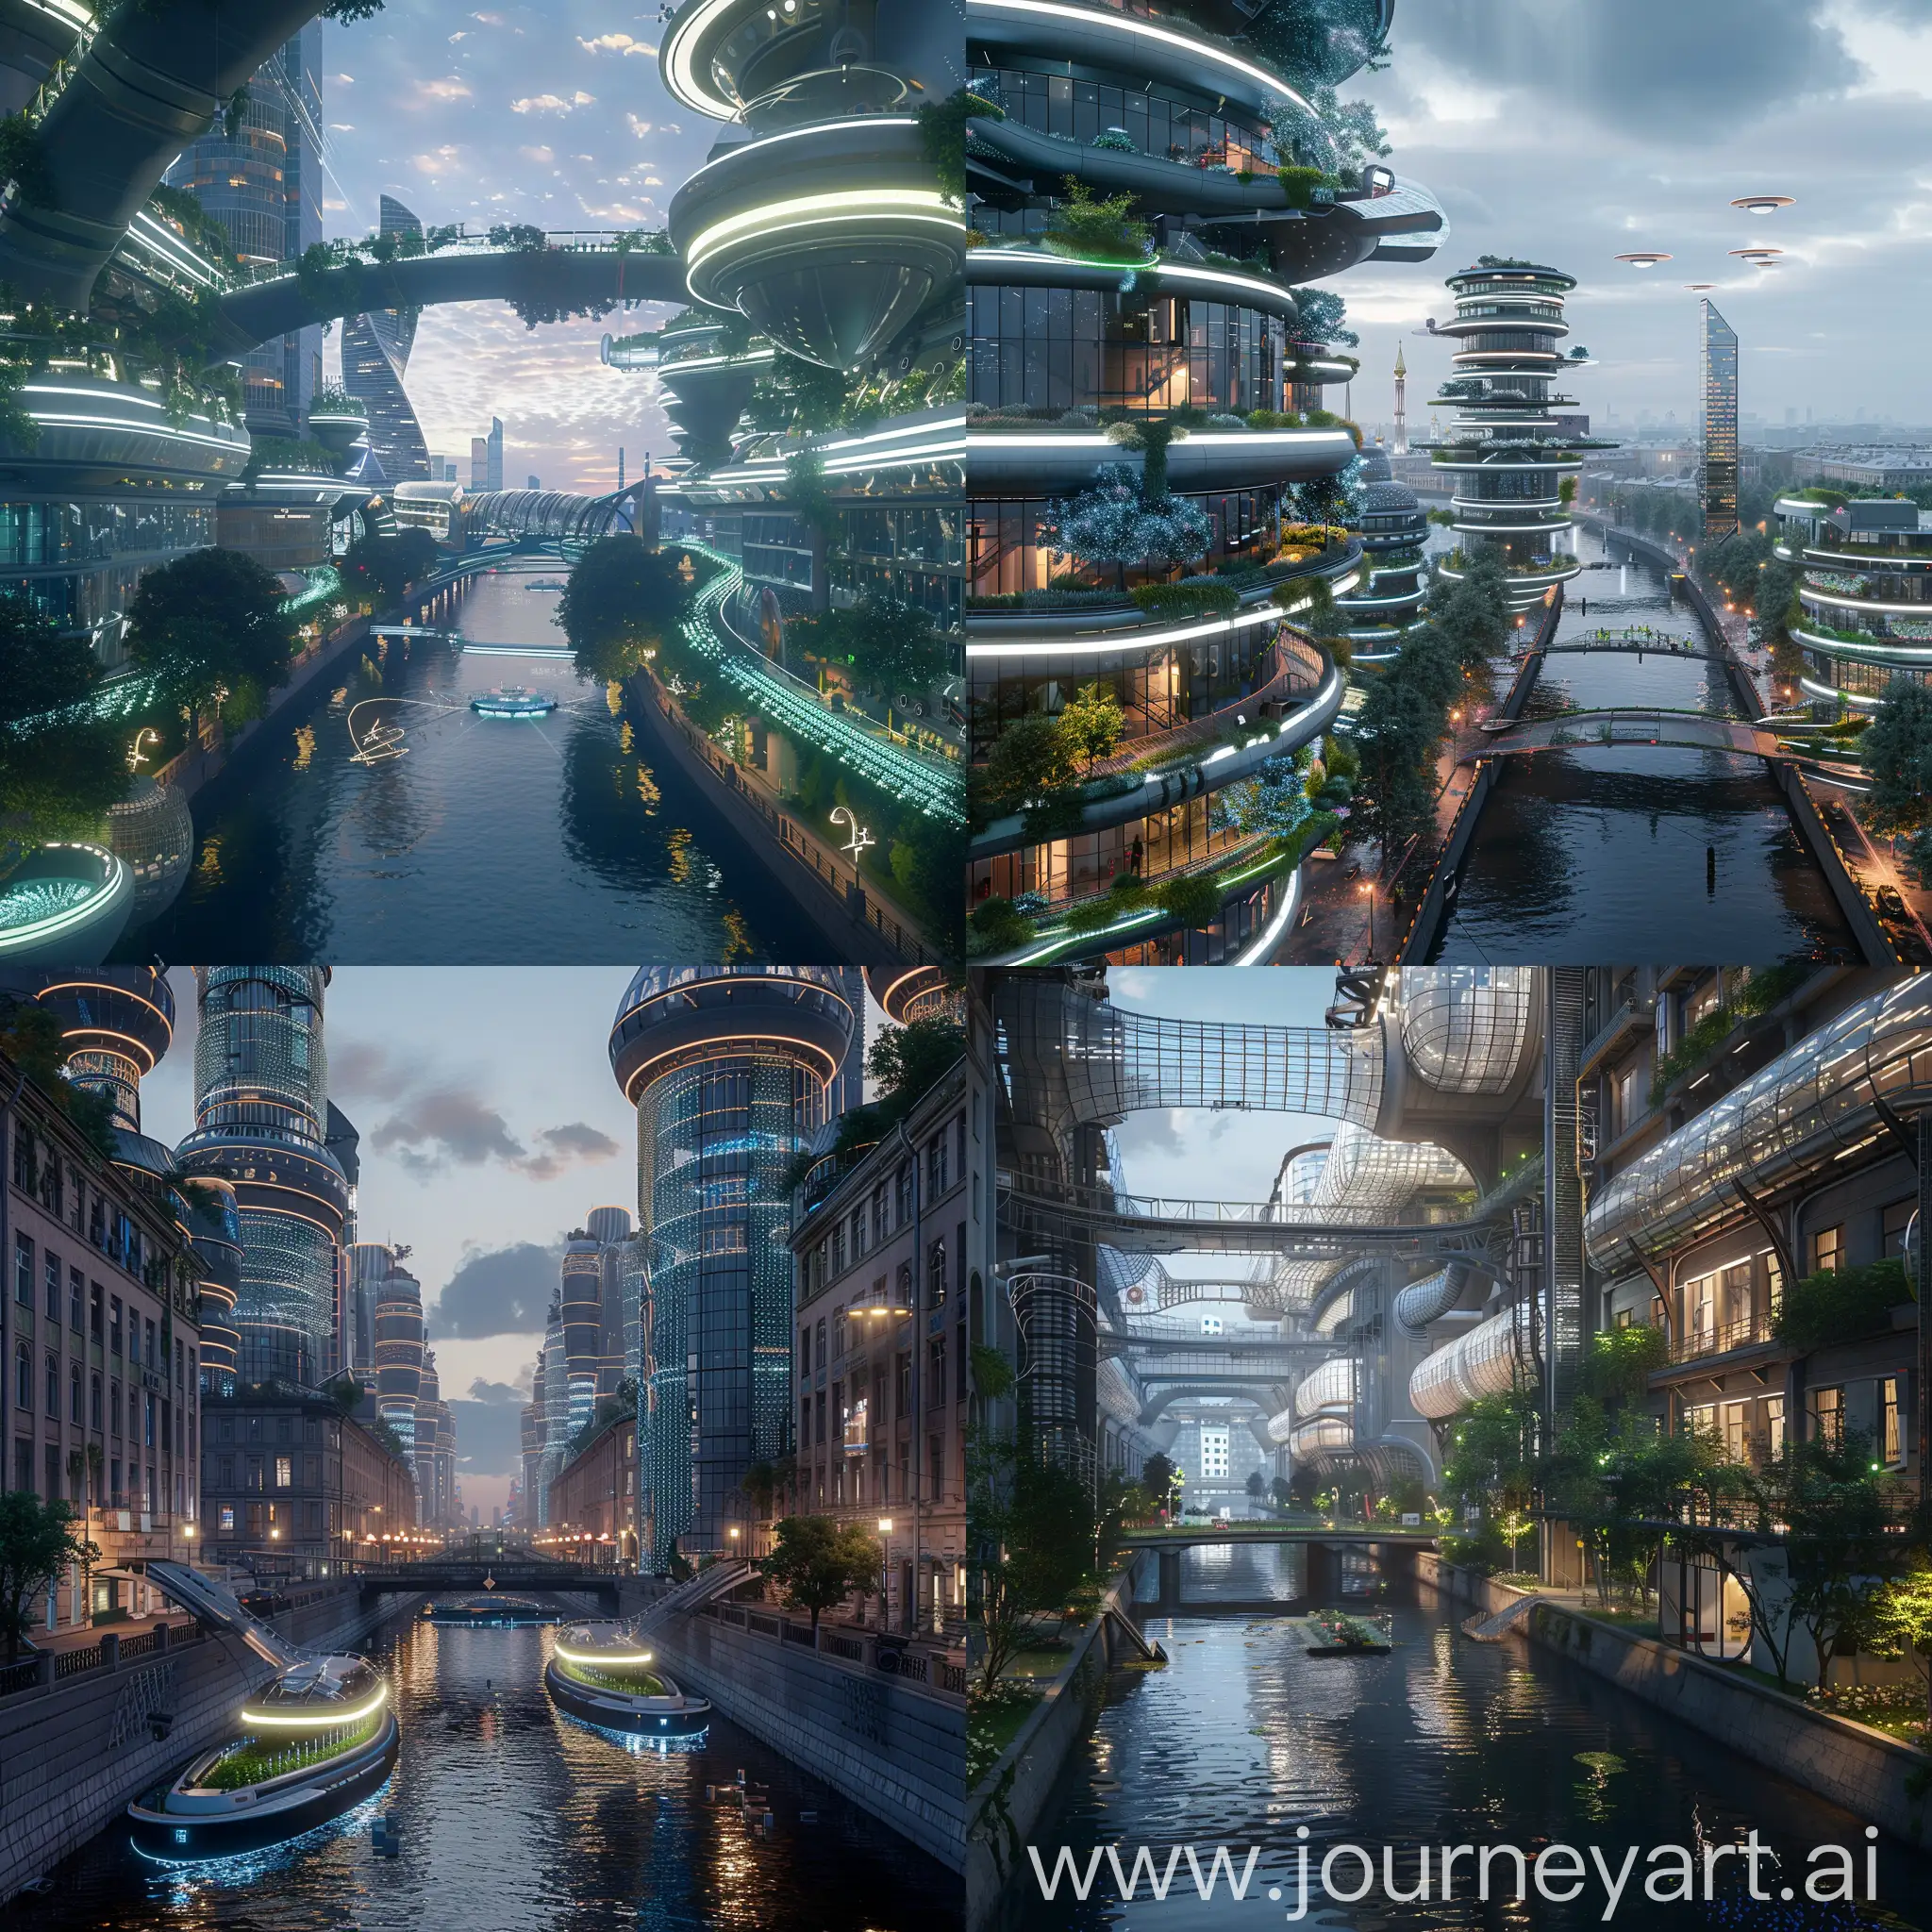 Futuristic-Saint-Petersburg-Bioluminescent-Canals-HighTech-Innovations